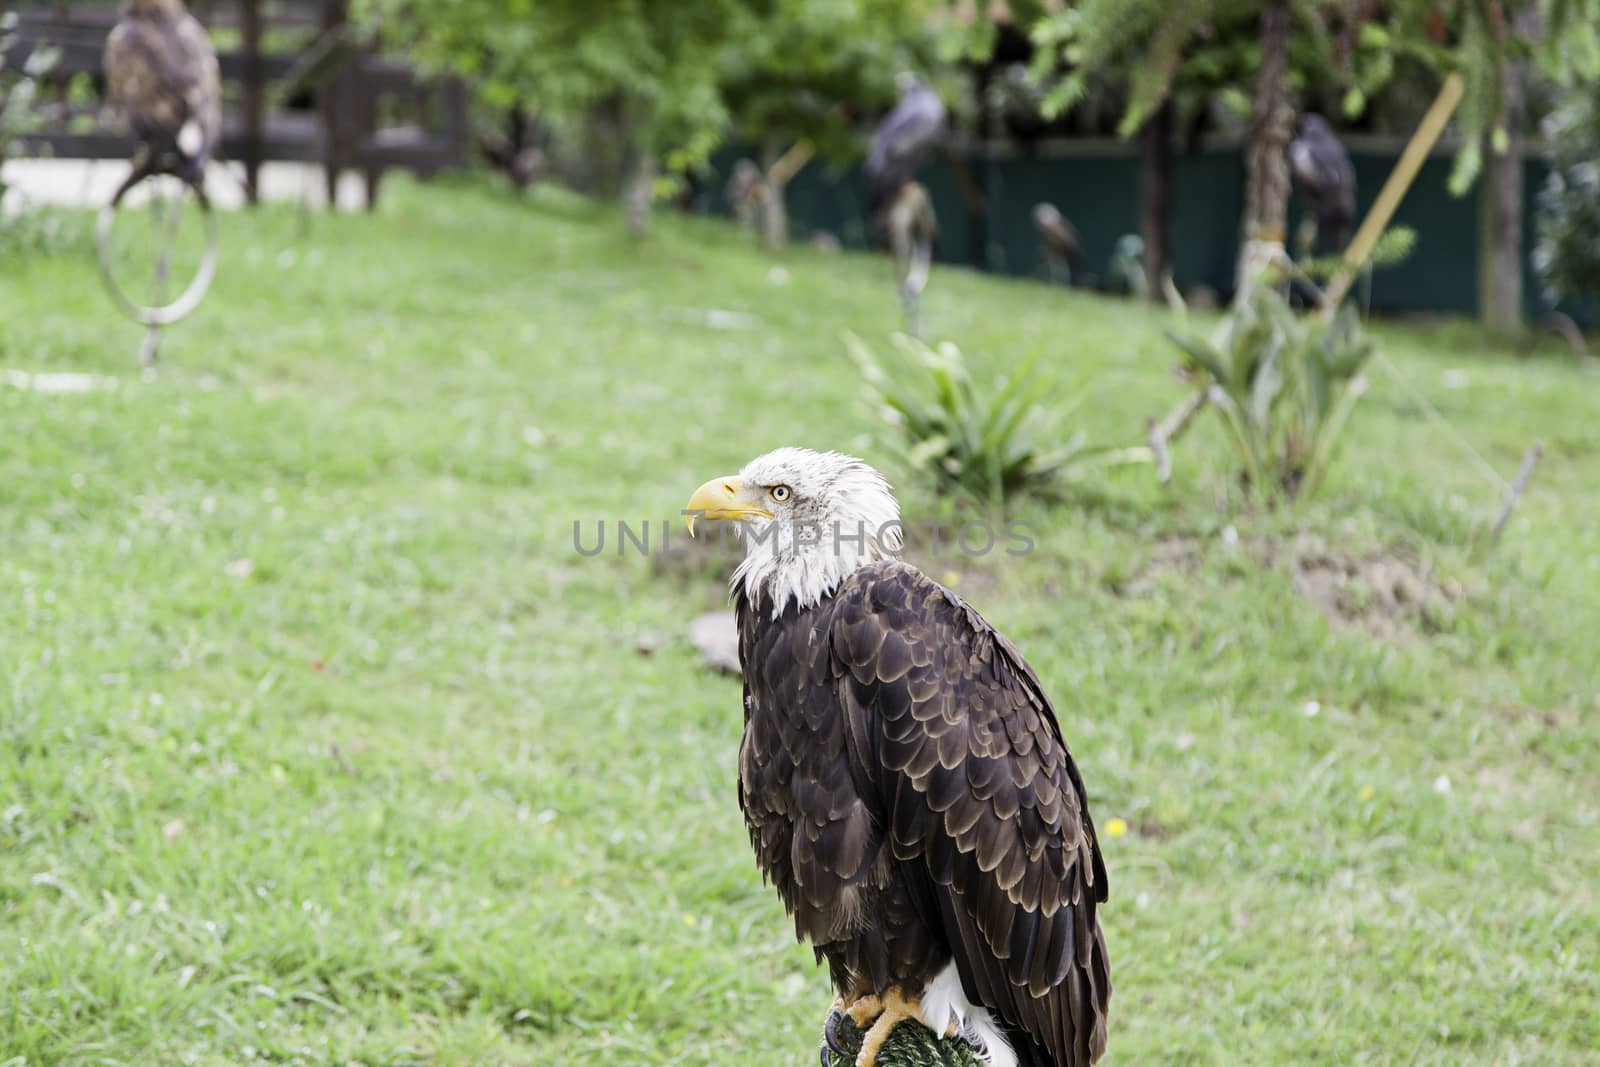 Wild eagle in captivity by esebene